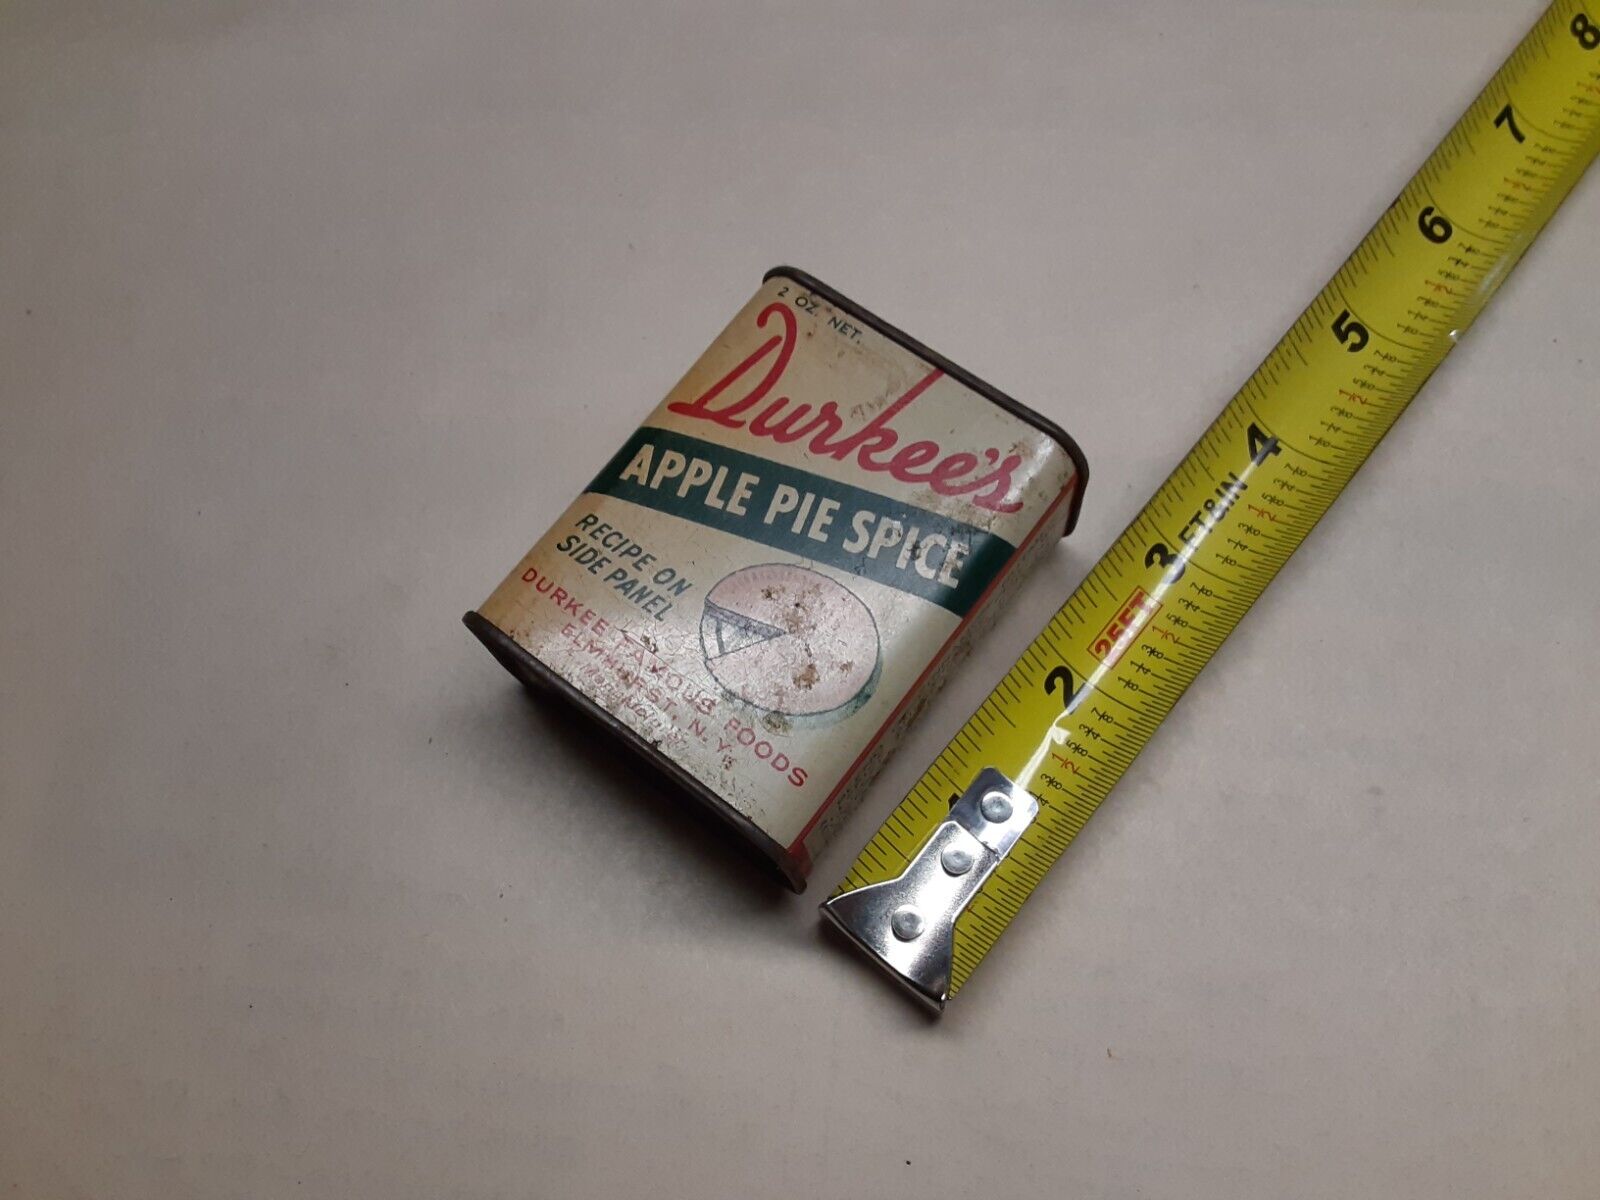 Vintage Durkee's Apple Pie Spice tin EMPTY